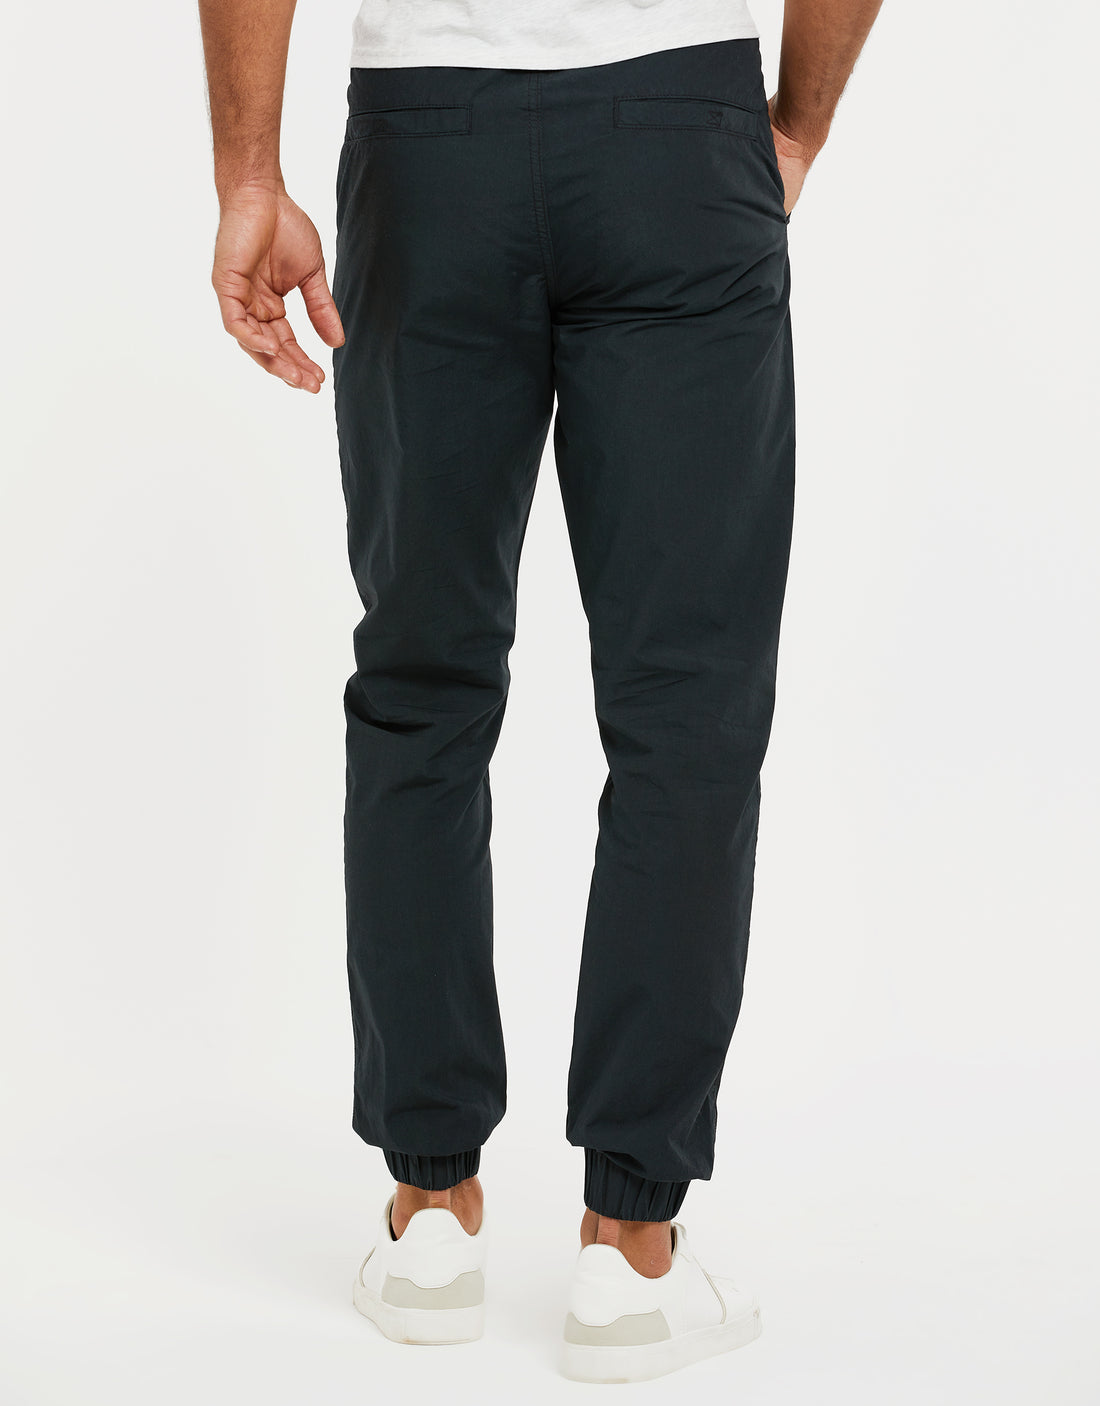 Men's Black Cuffed Cotton Drawstring Jogger Style Trousers – Threadbare